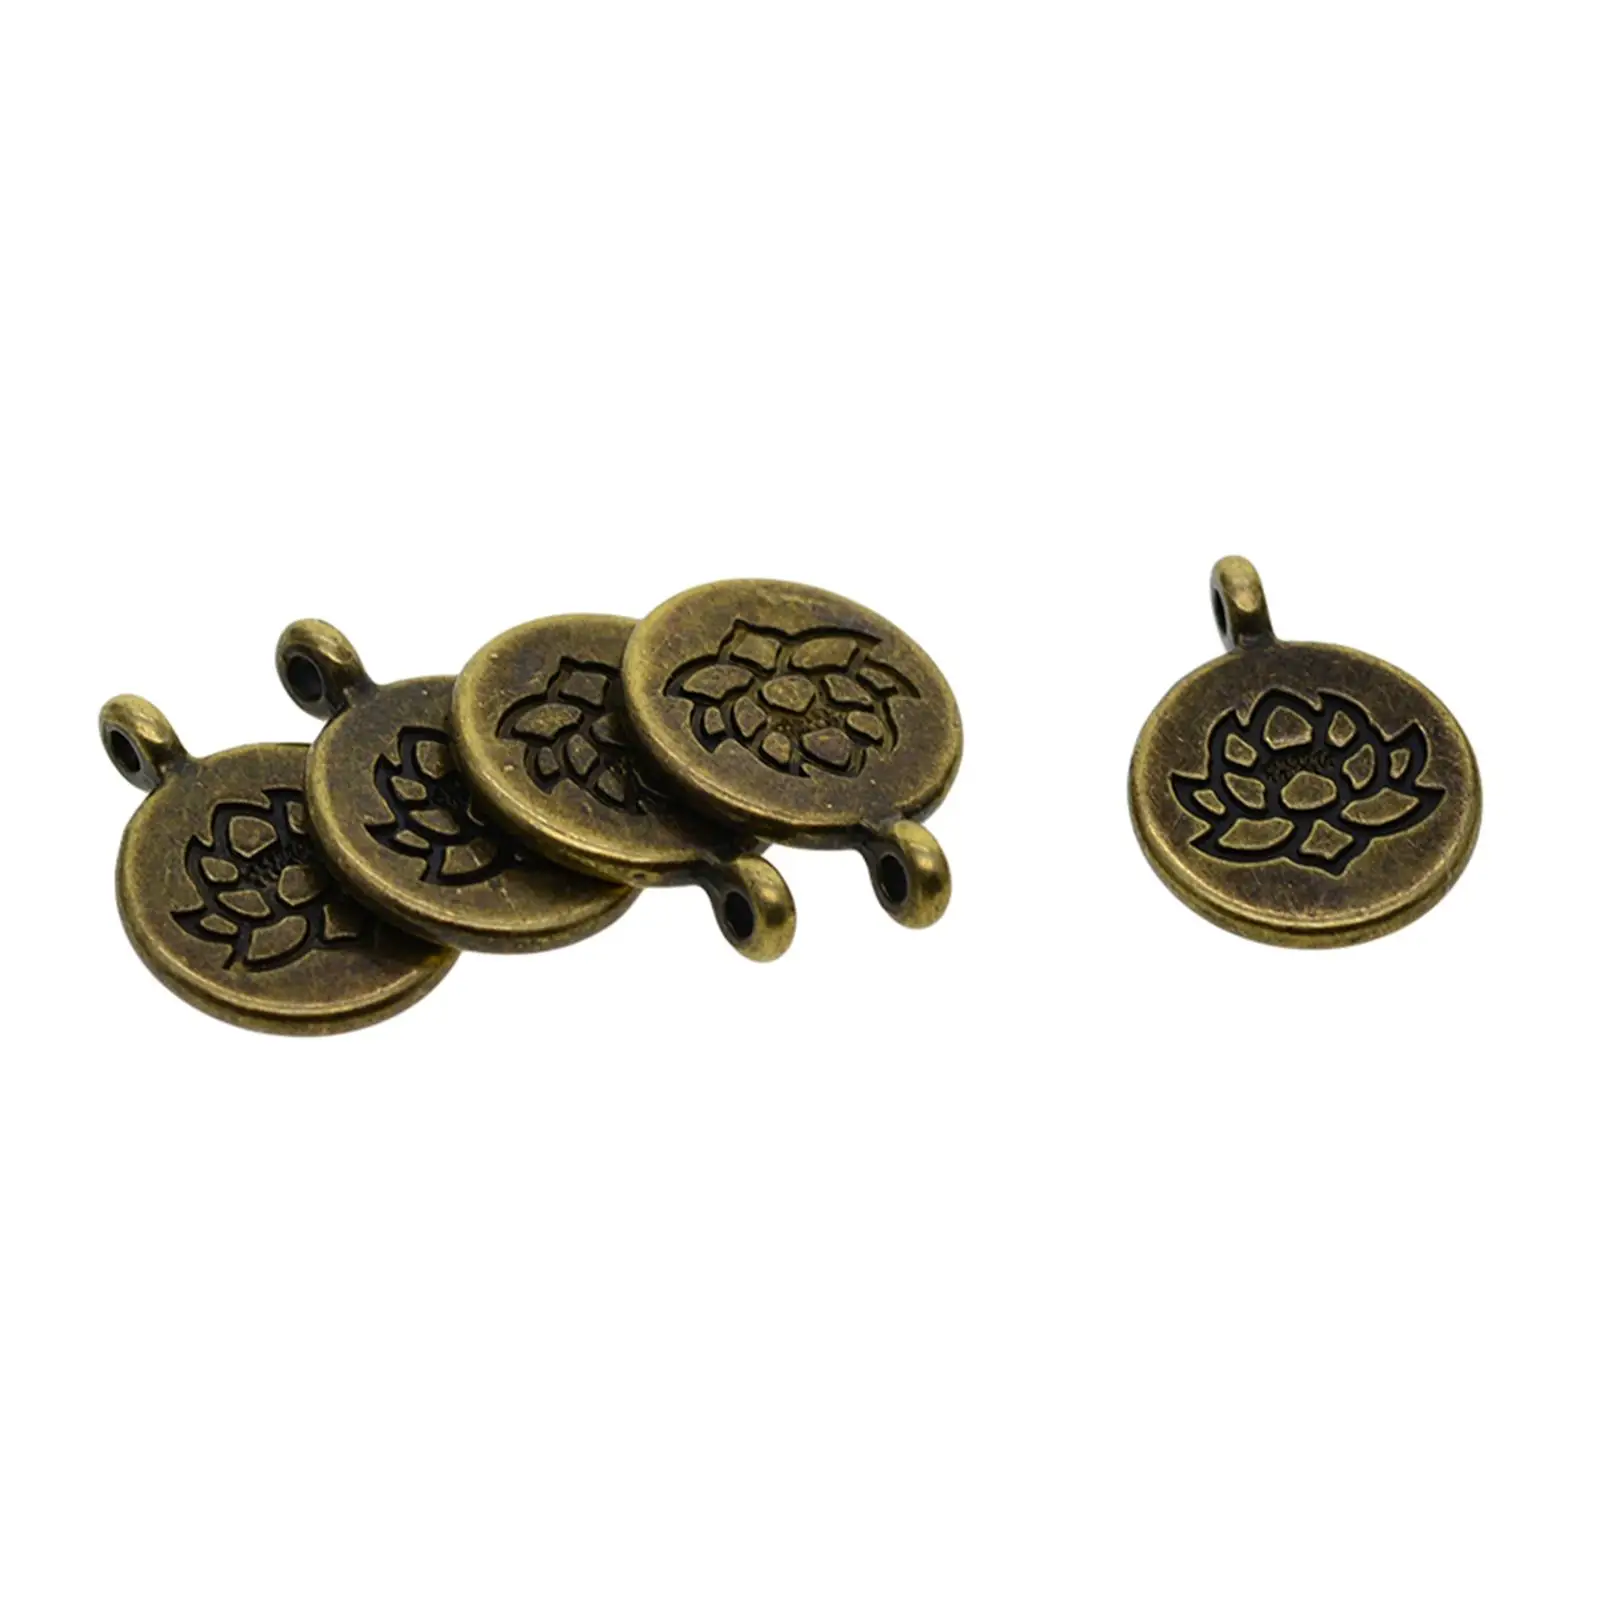 30Pcs Lotus Flower Pendant Yoga Pendant Craft Supplies Handmade Crafting Jewelry Charms DIY for Jewelry Making Bracelet